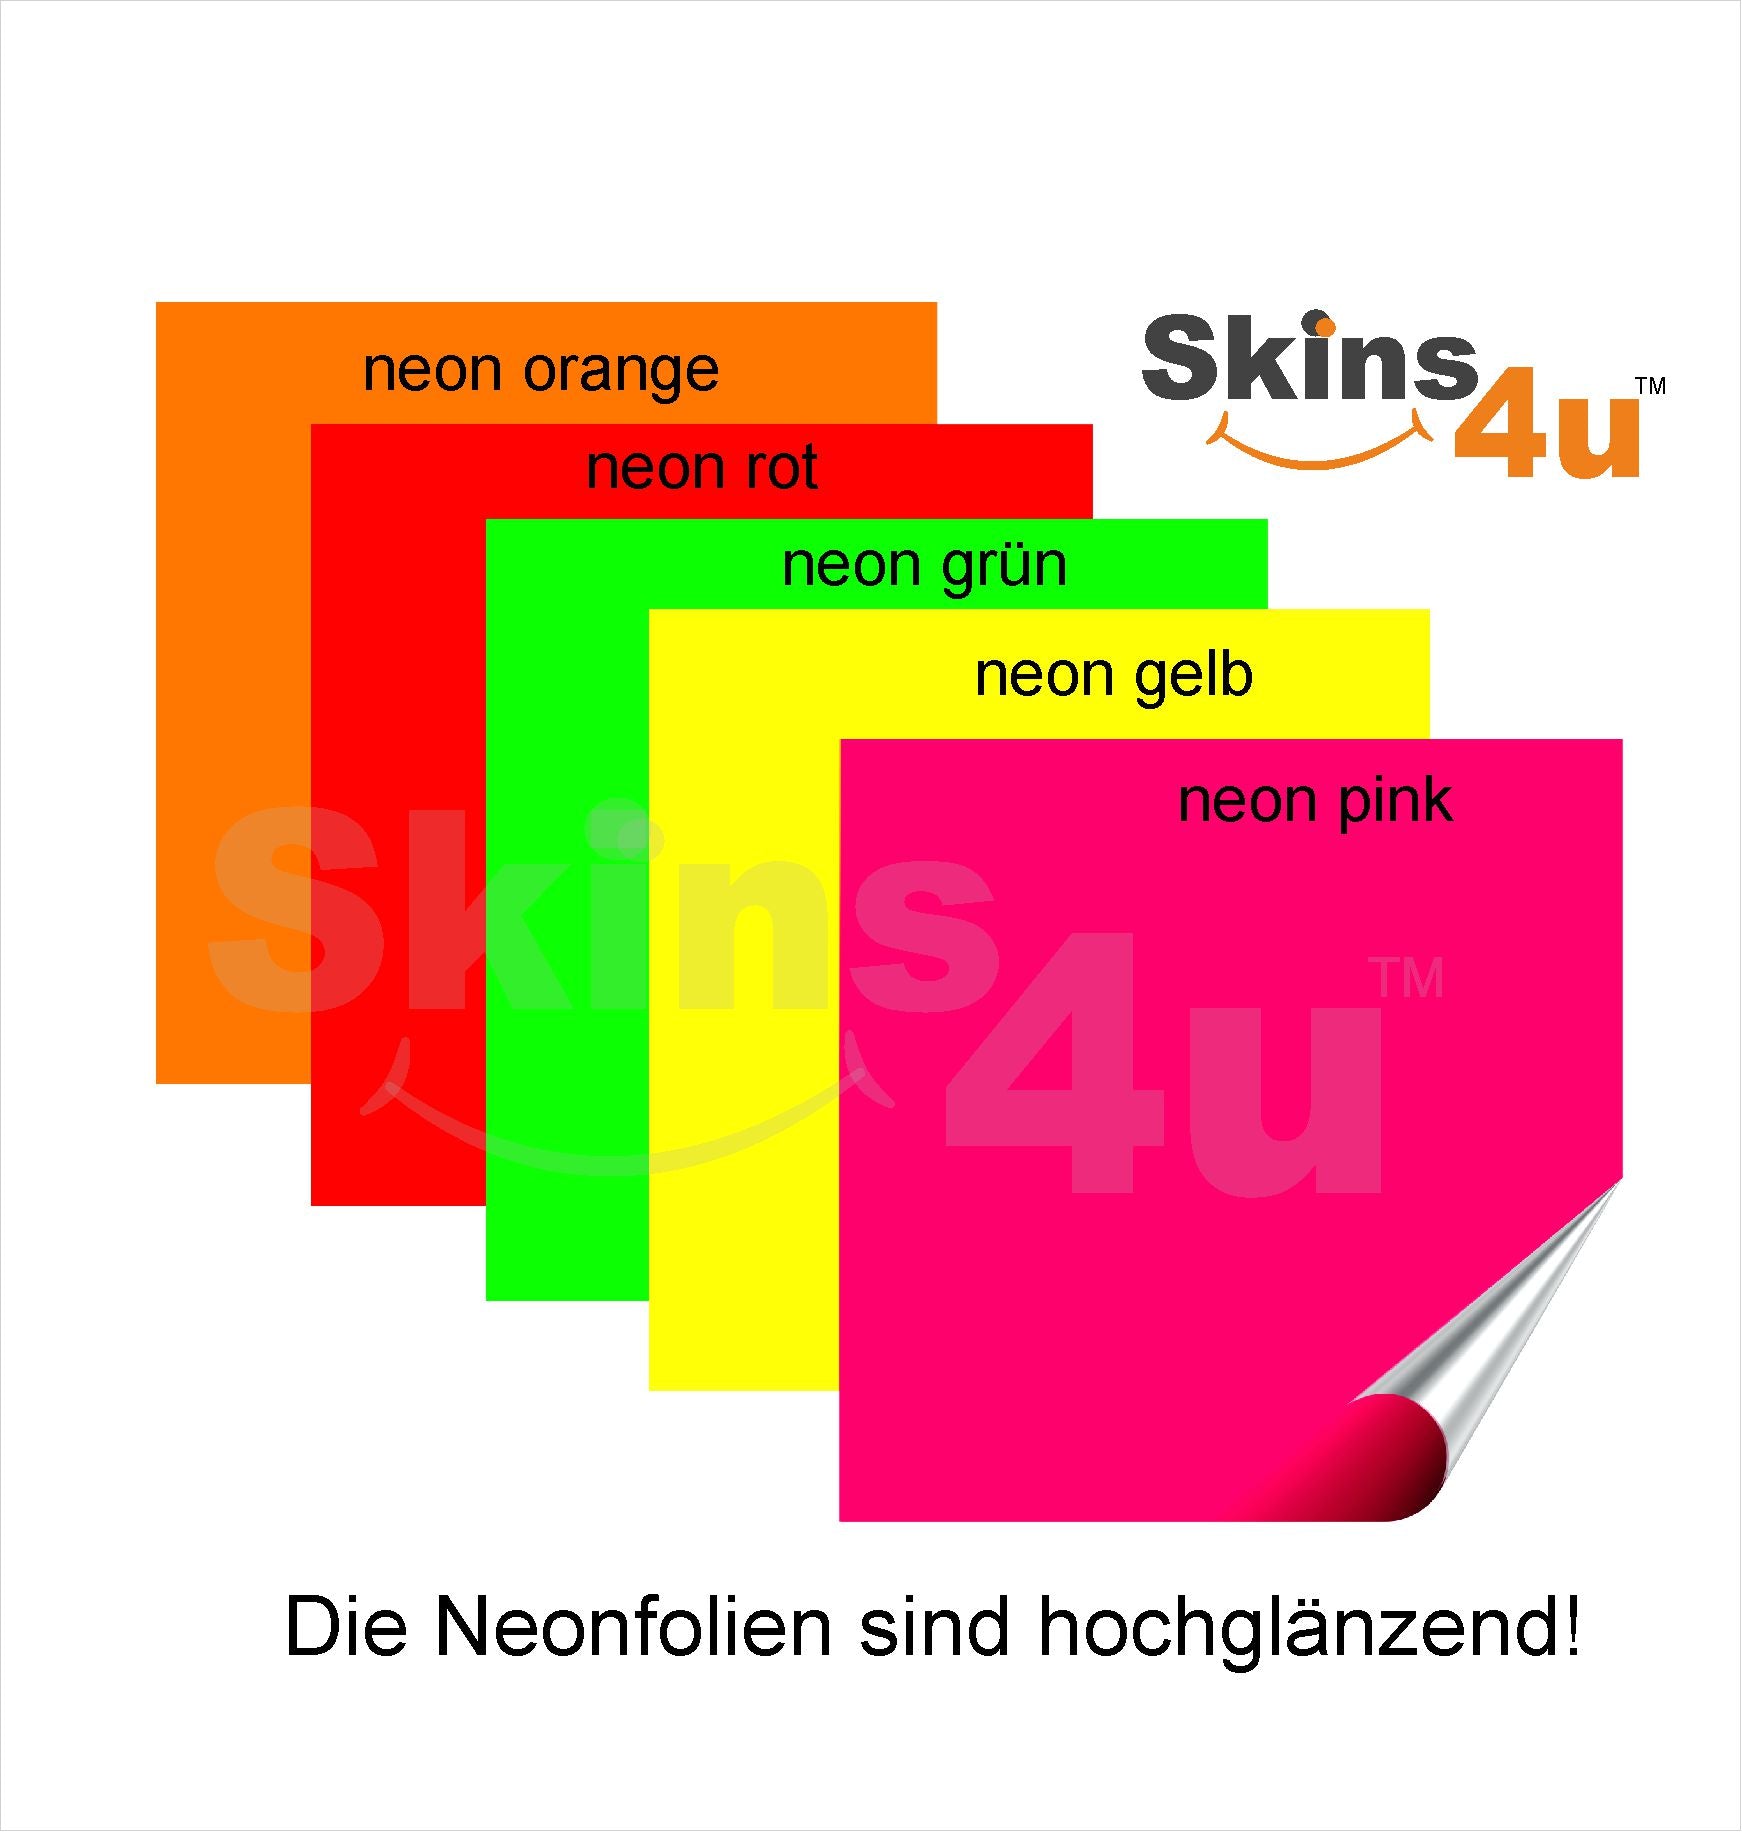 DJI Drohnen Aufkleber neon Farben Mavic Pro / Mini / Air / Phantom / Enterprise / Zoom Elektronik-Sticker & -Aufkleber Skins4u   